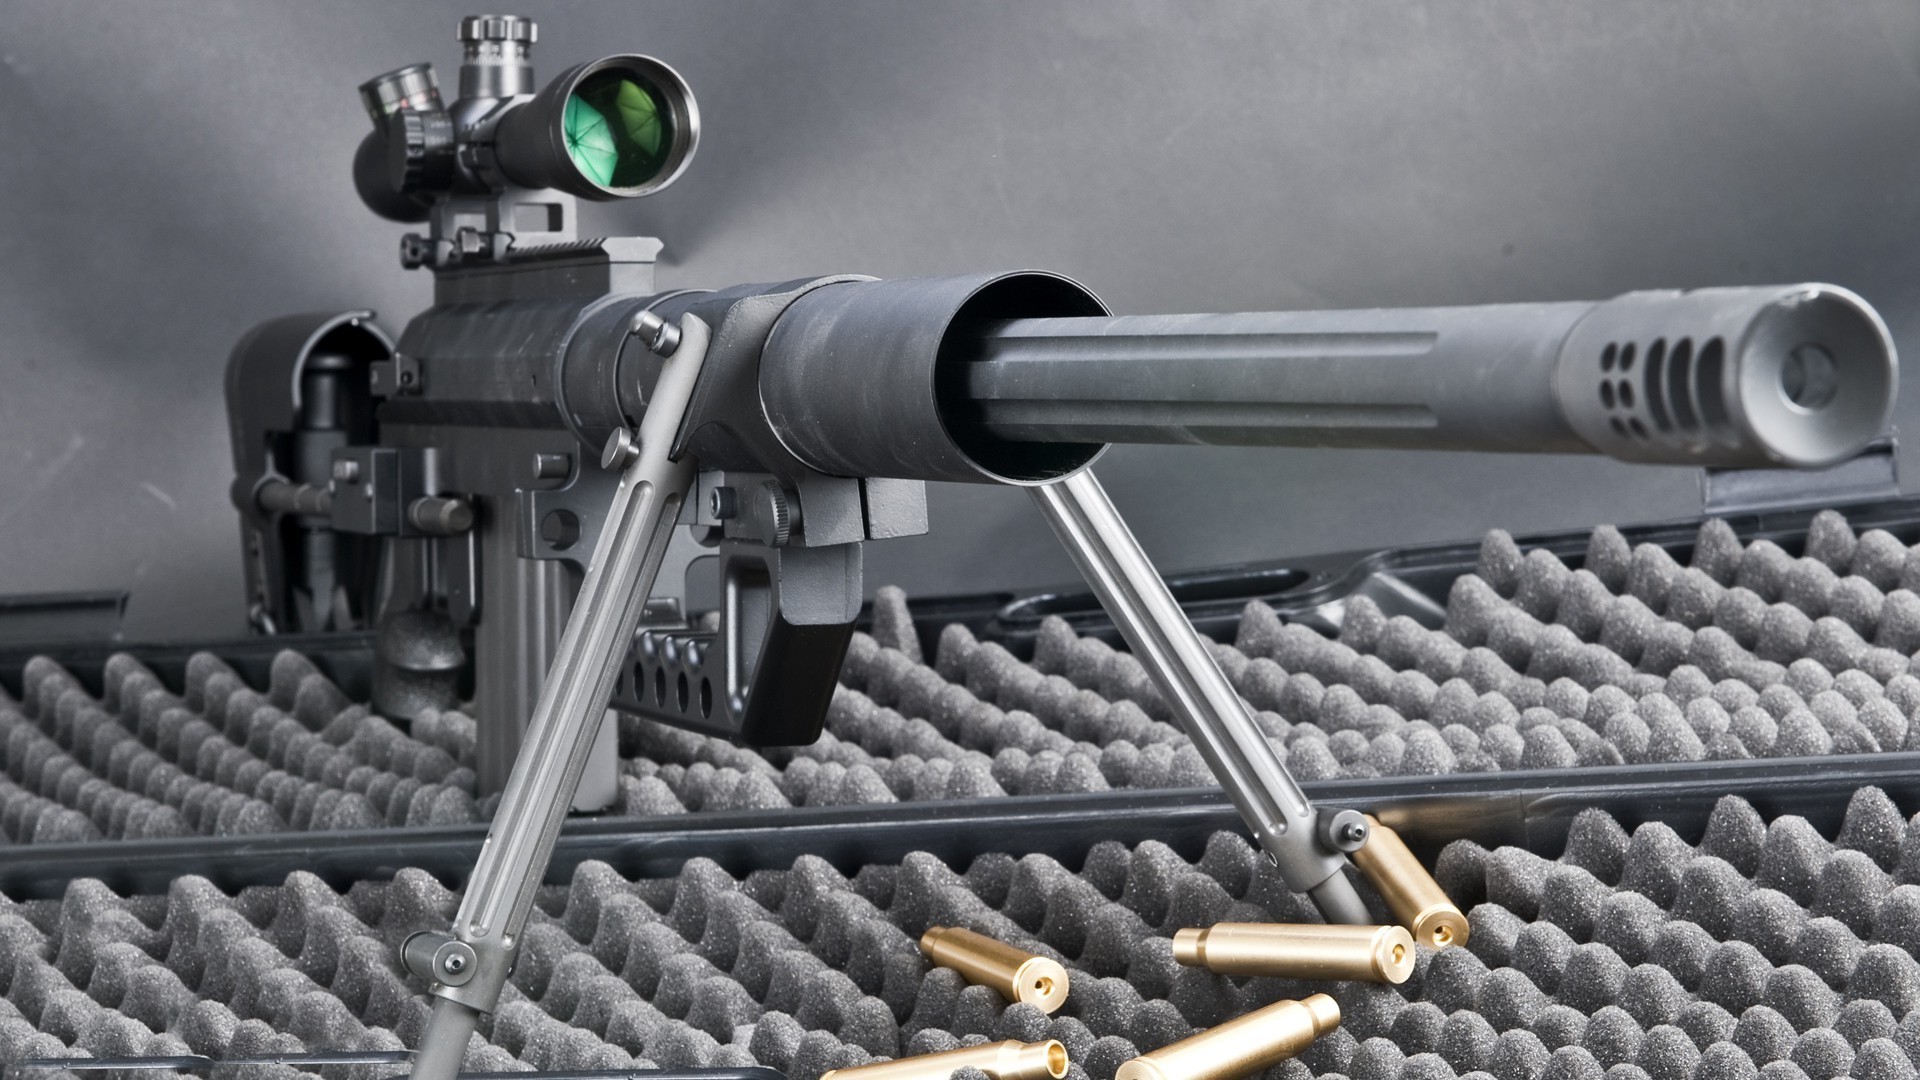 General 1920x1080 gun sniper rifle military CheyTac M200 weapon